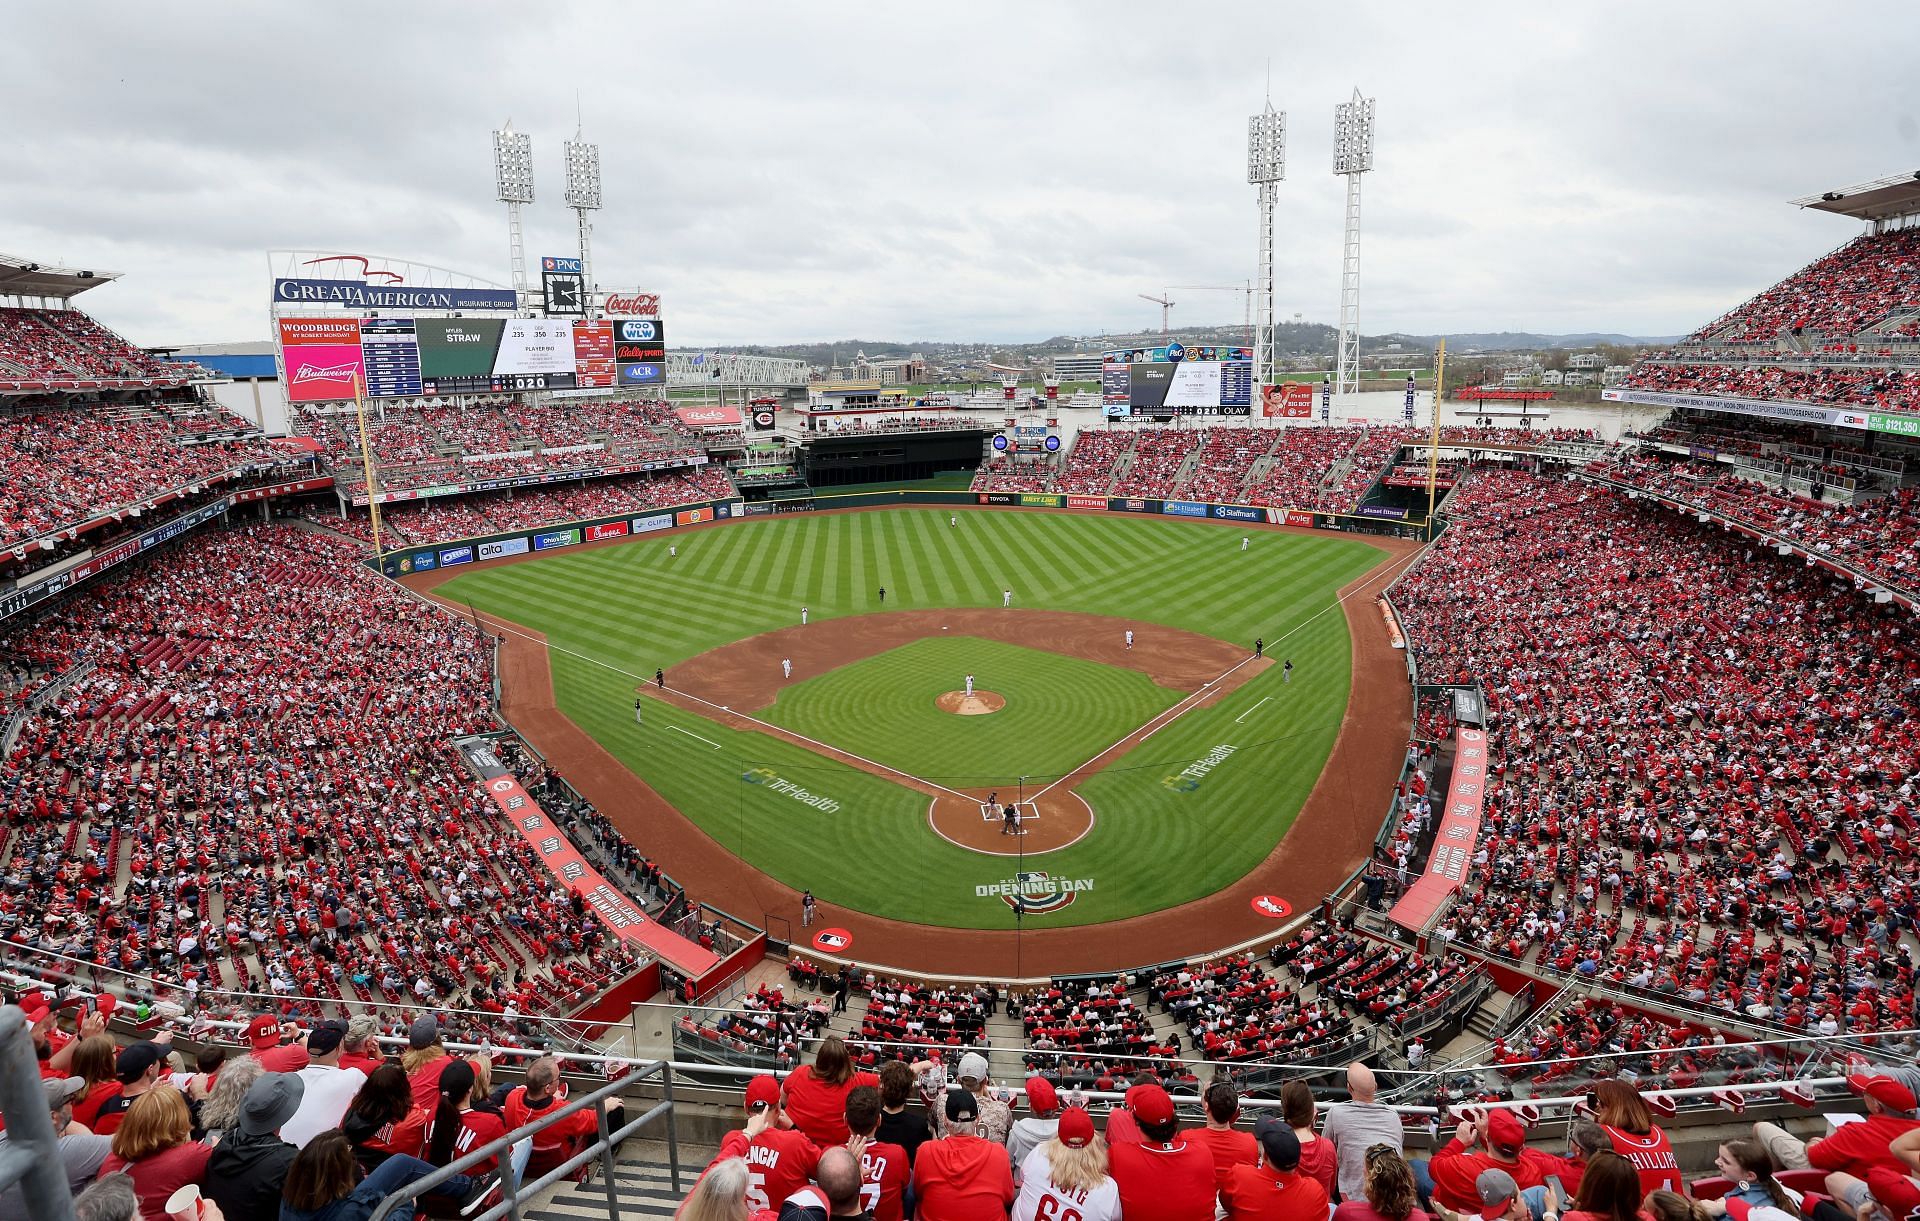 The Great American Ballpark in Cincinnati